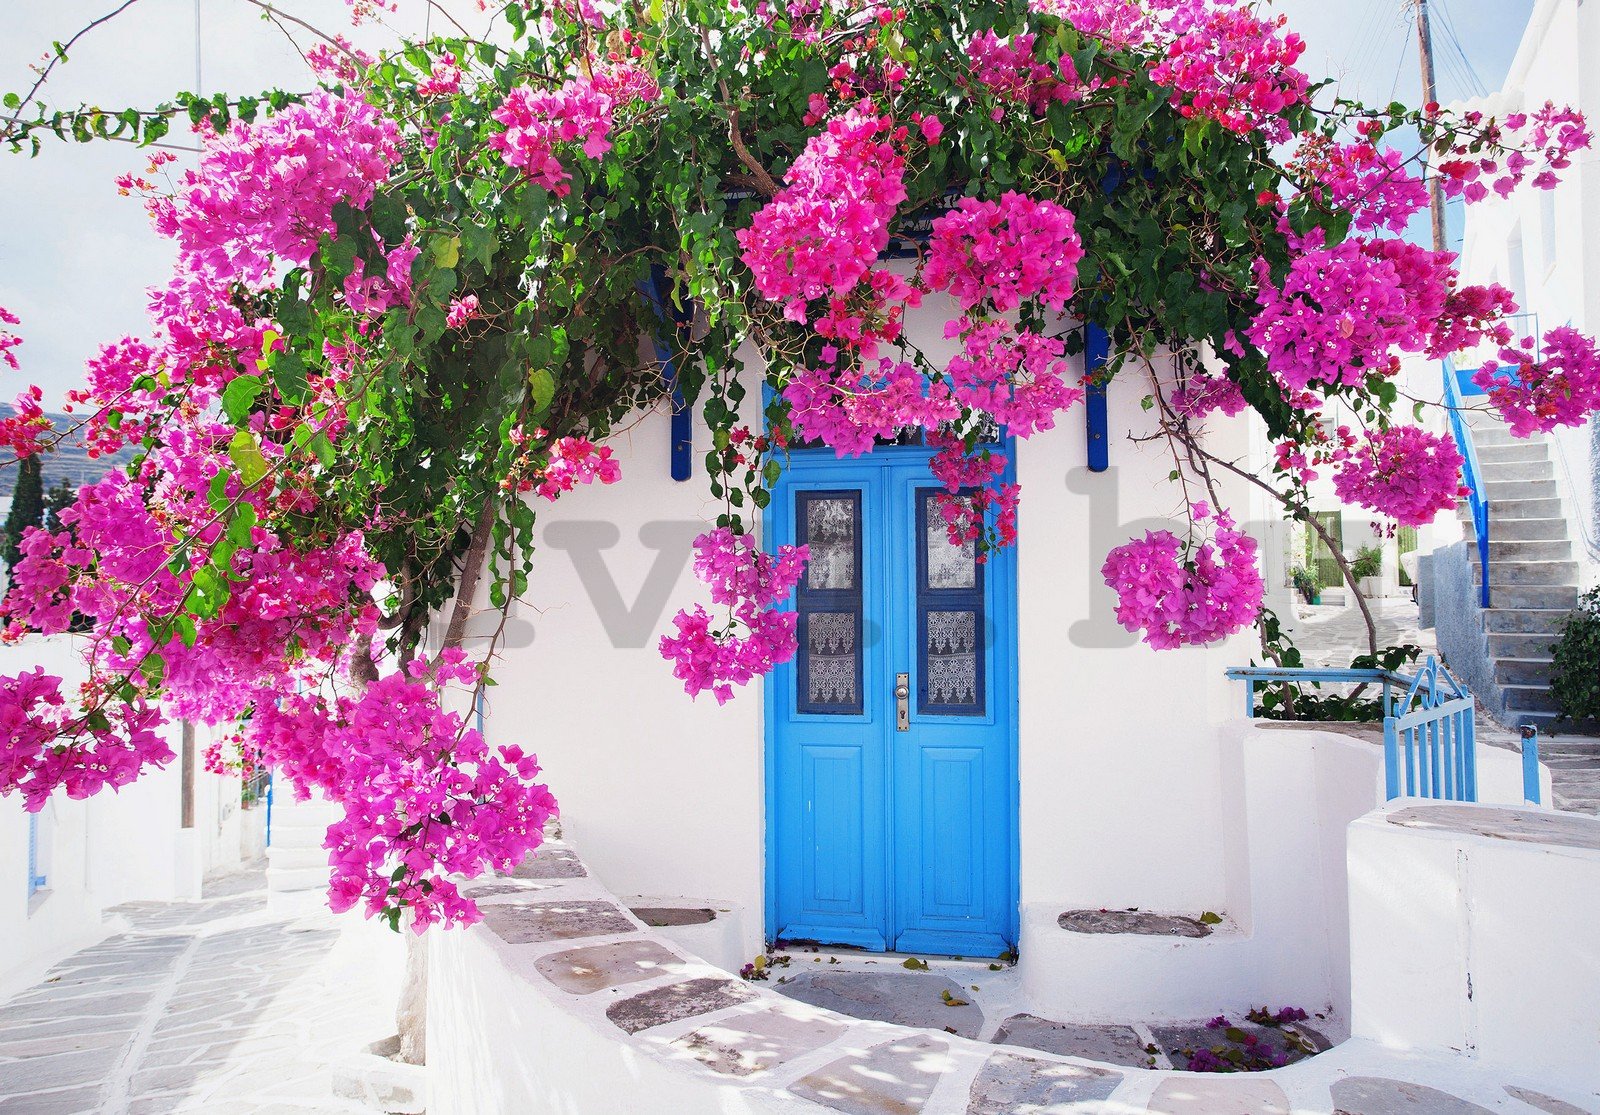 Vlies fotótapéta: Görög utcai virágok (1) - 368x254 cm